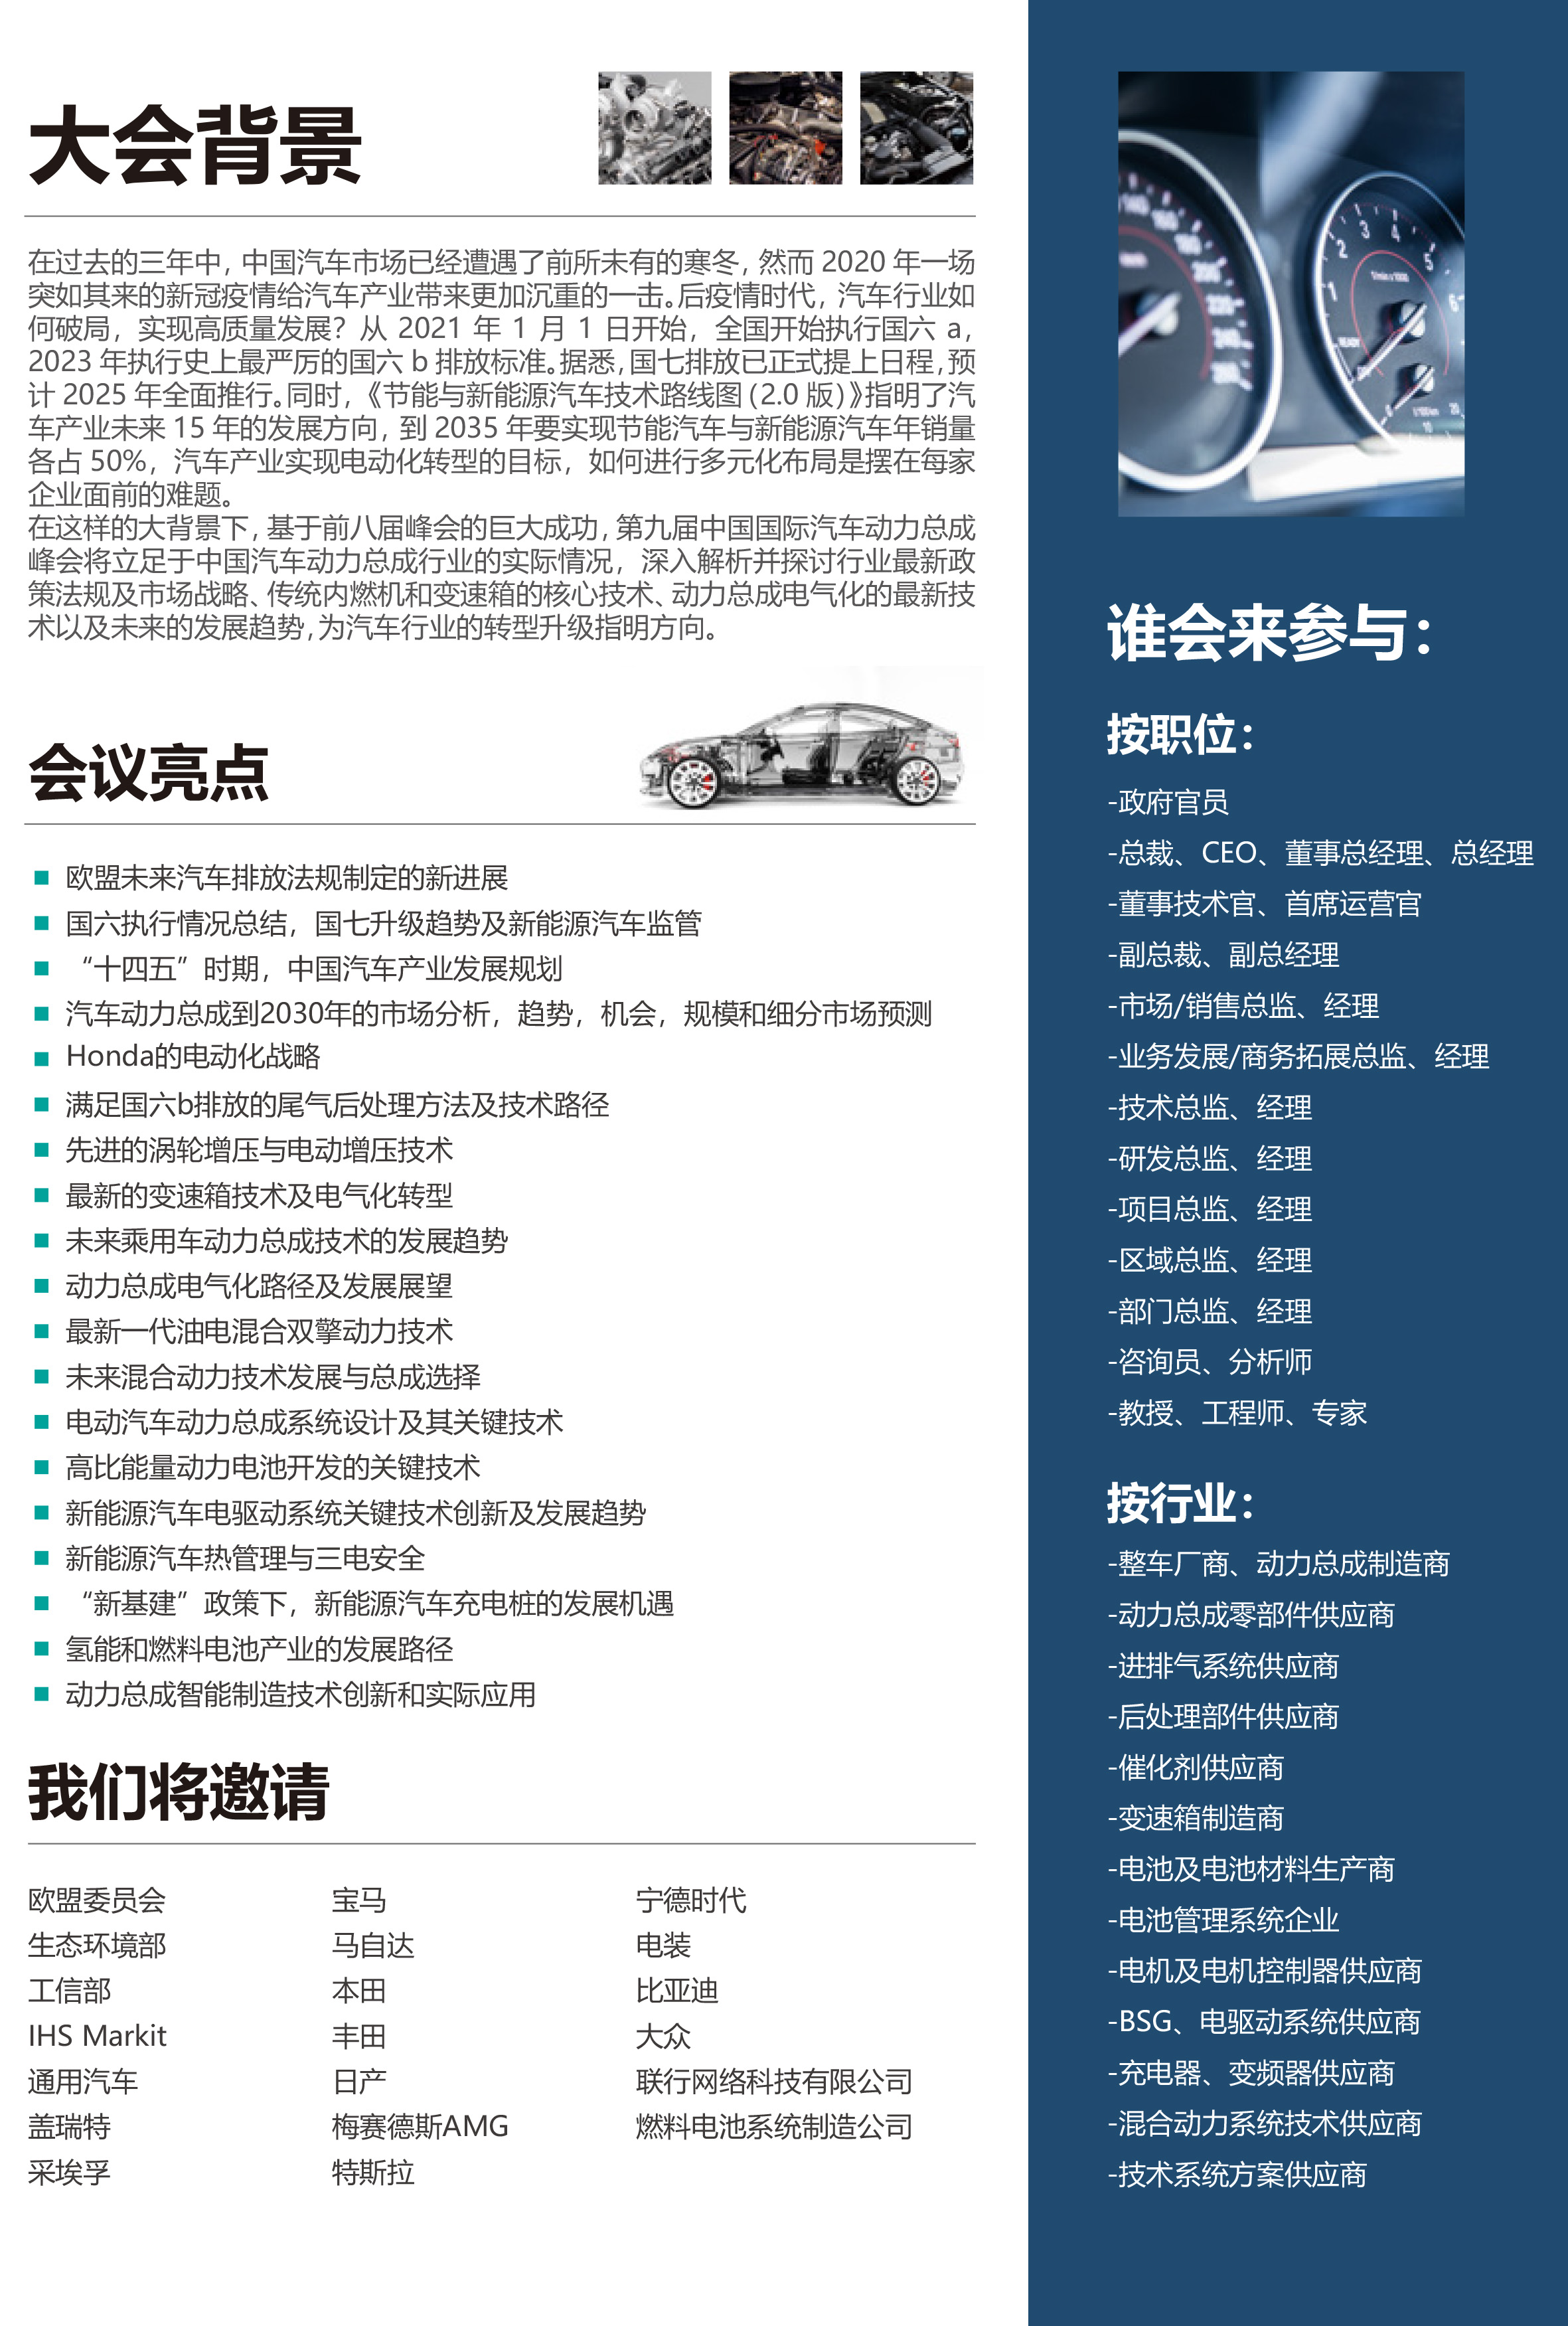 IAPS 2021第九届中国国际汽车动力总成峰会